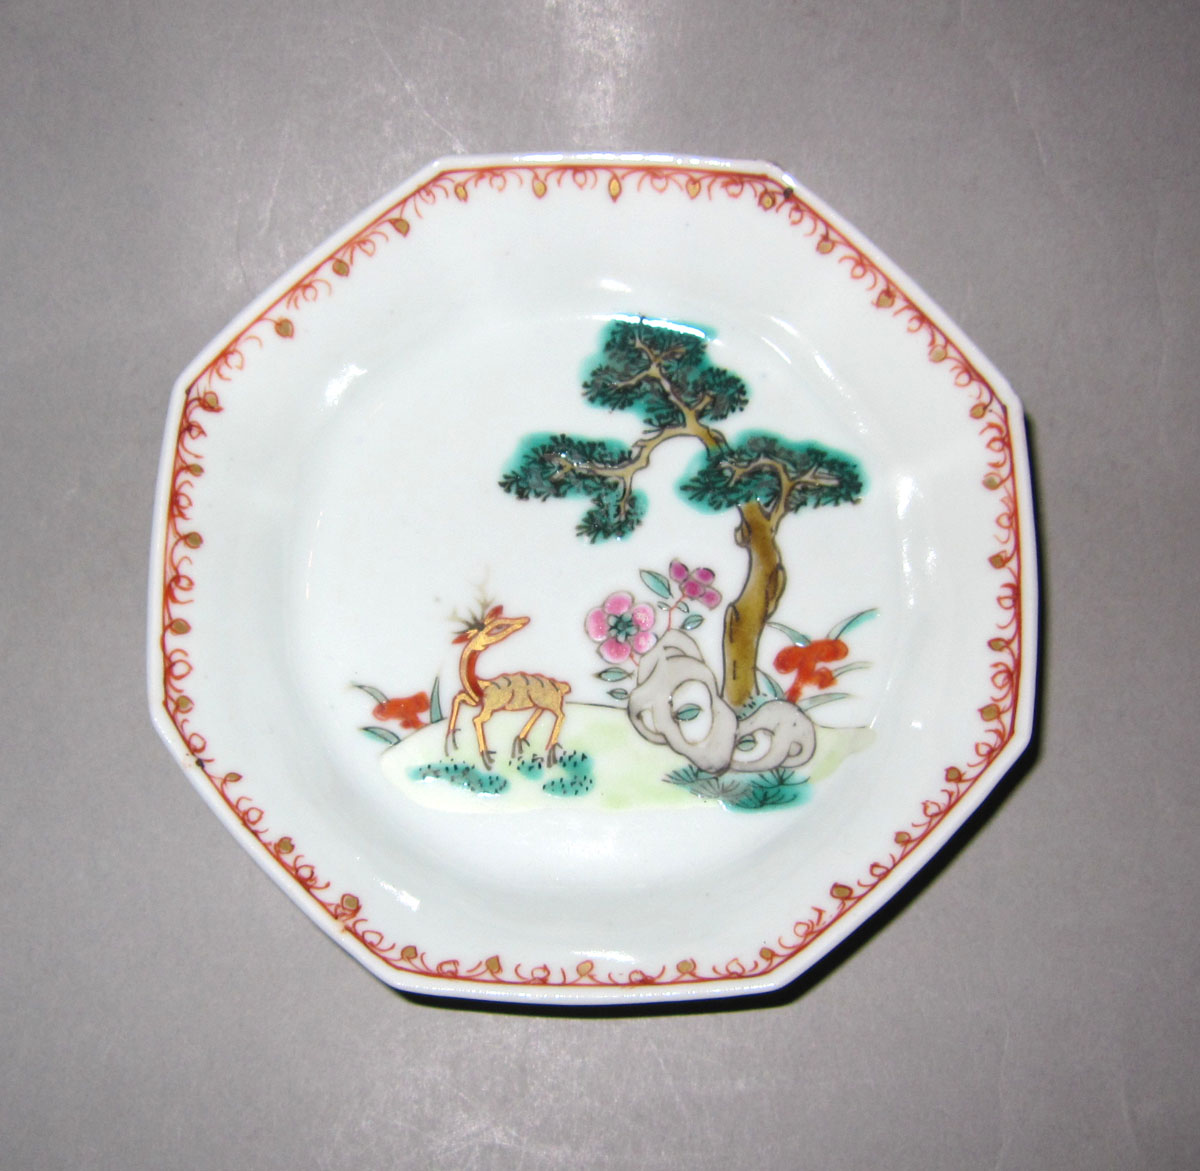 1953.0156.007 B Porcelain saucer